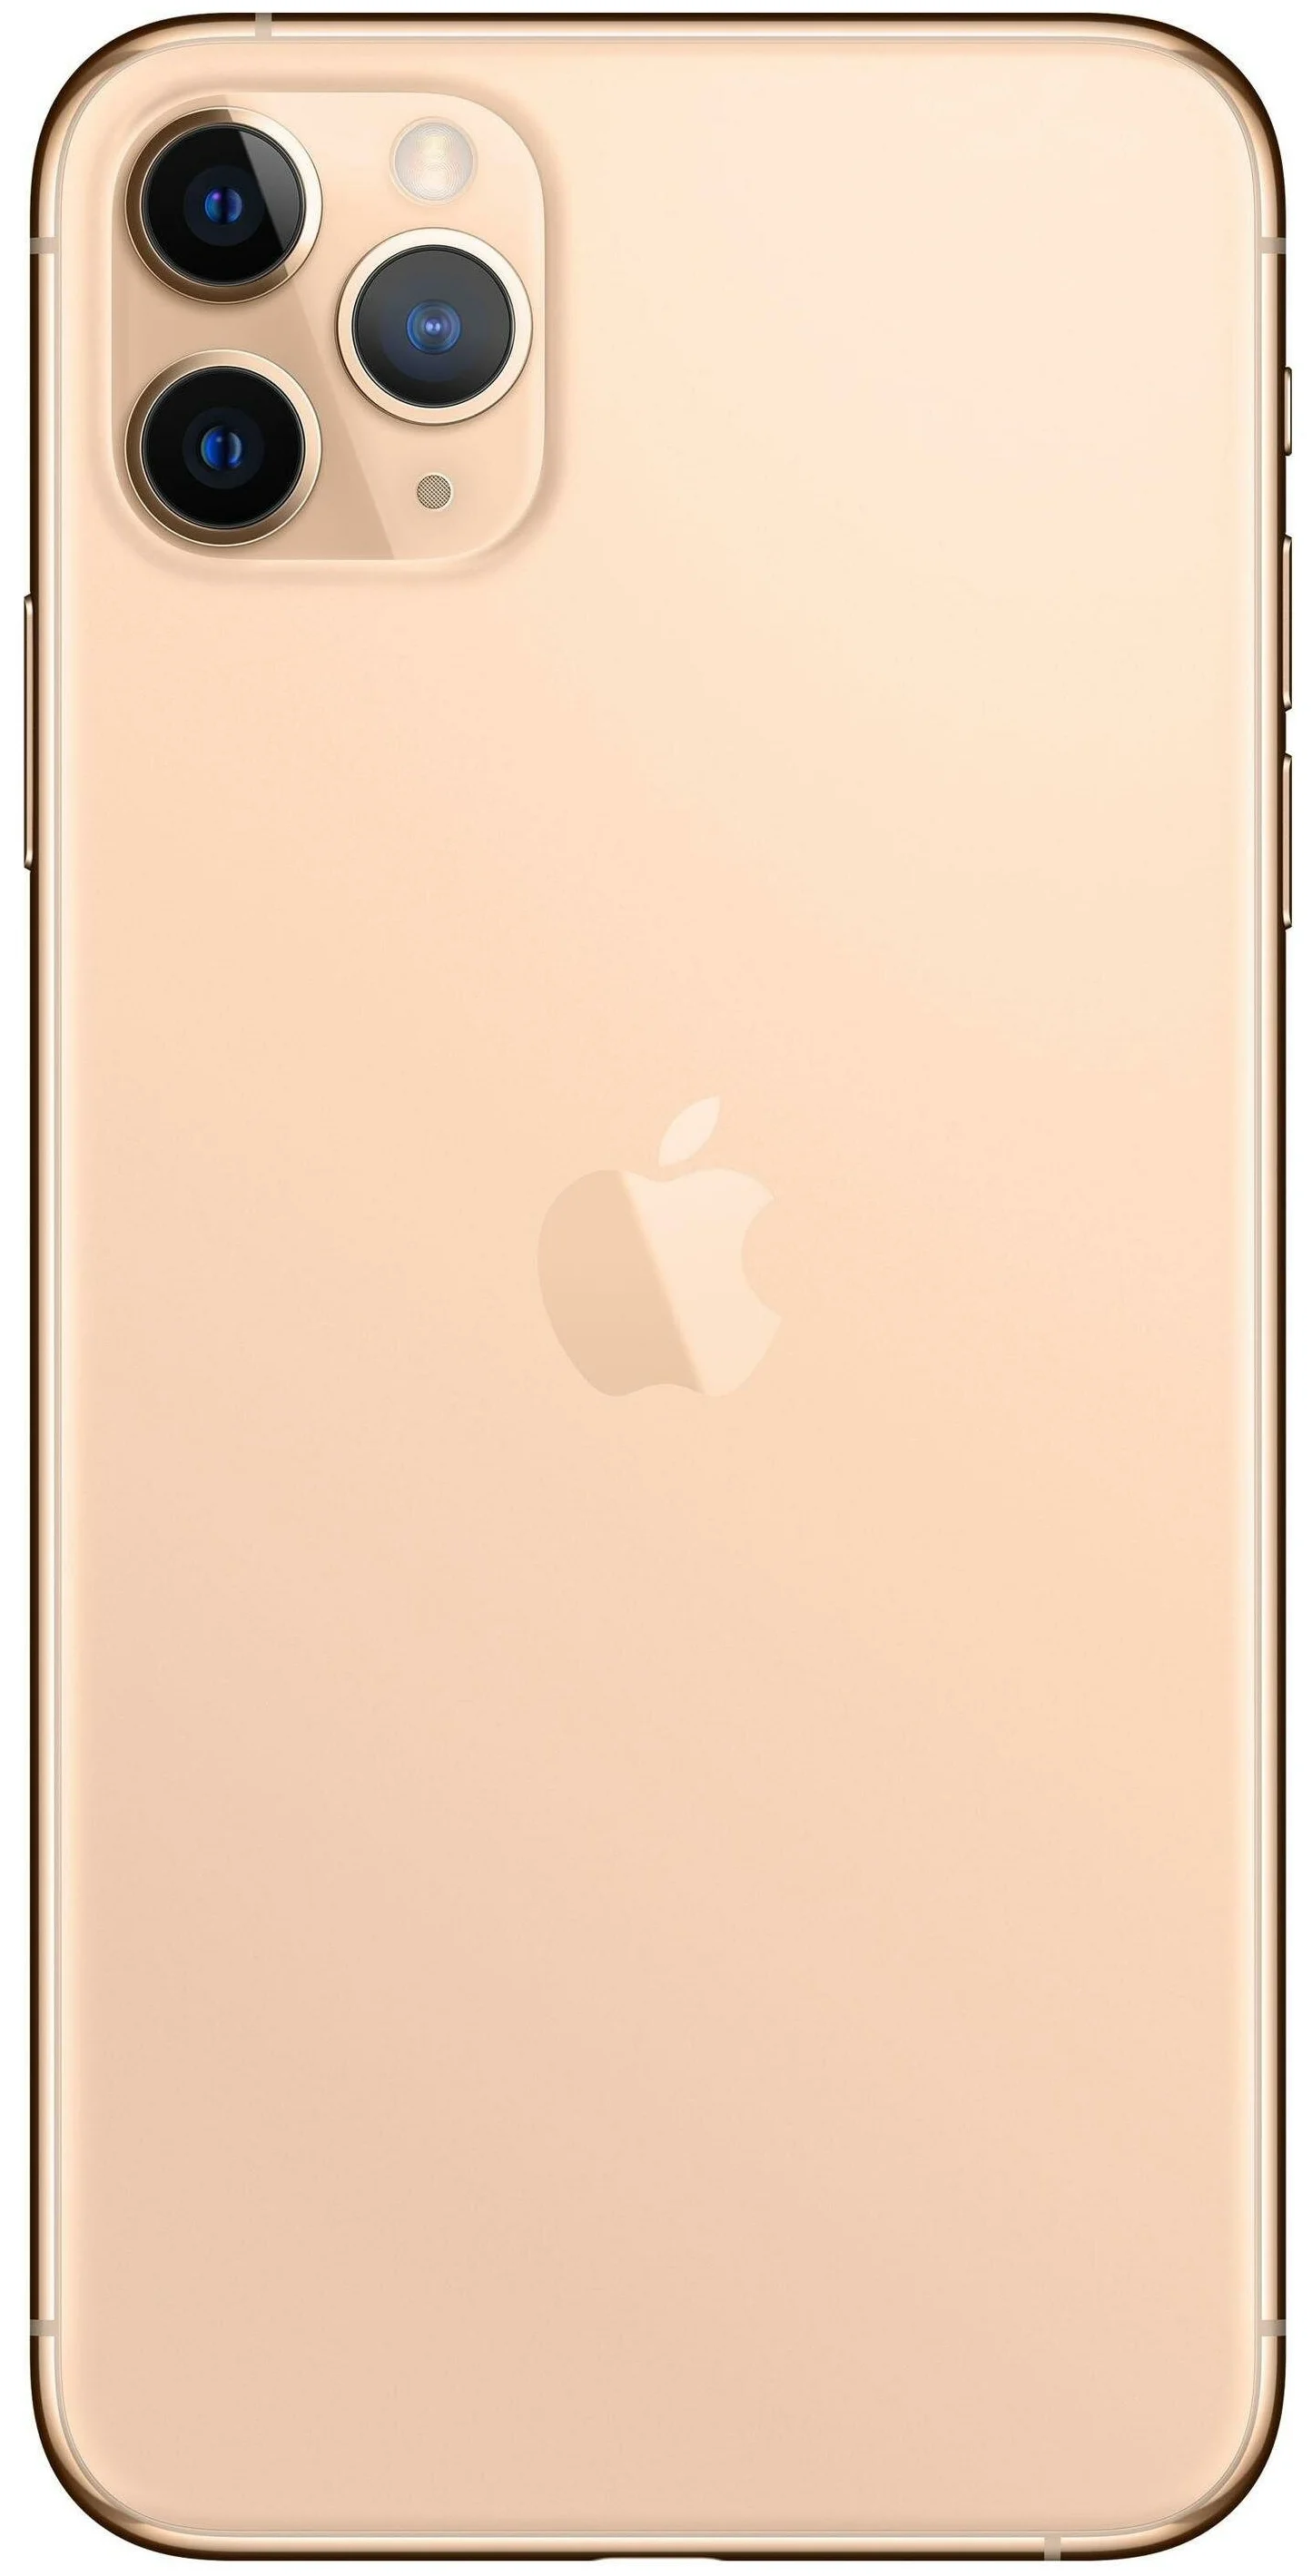 Apple iPhone 11 Pro Max 64GB - память: 64 ГБ